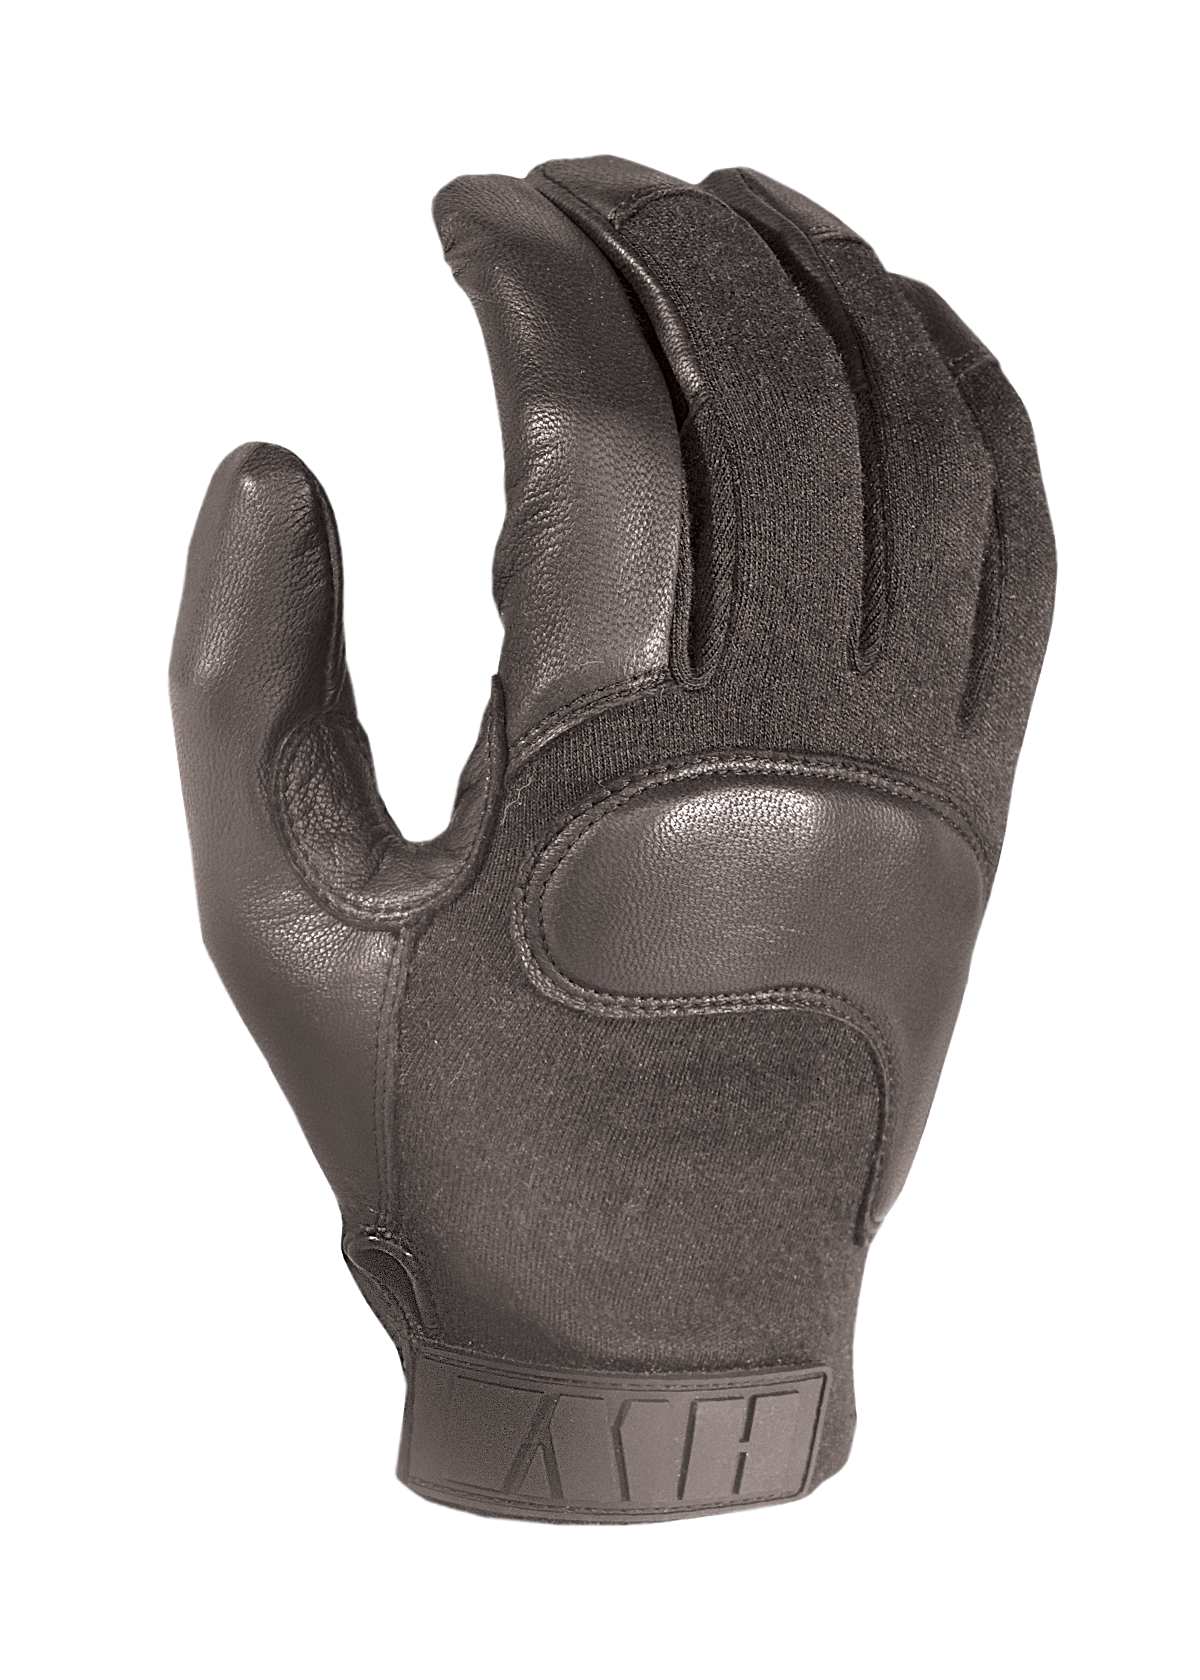 Stauffer Trackman Premium Goatskin Leather, Kevlar Lined, Cut Resistant Work Gloves (Large) K900G4 L